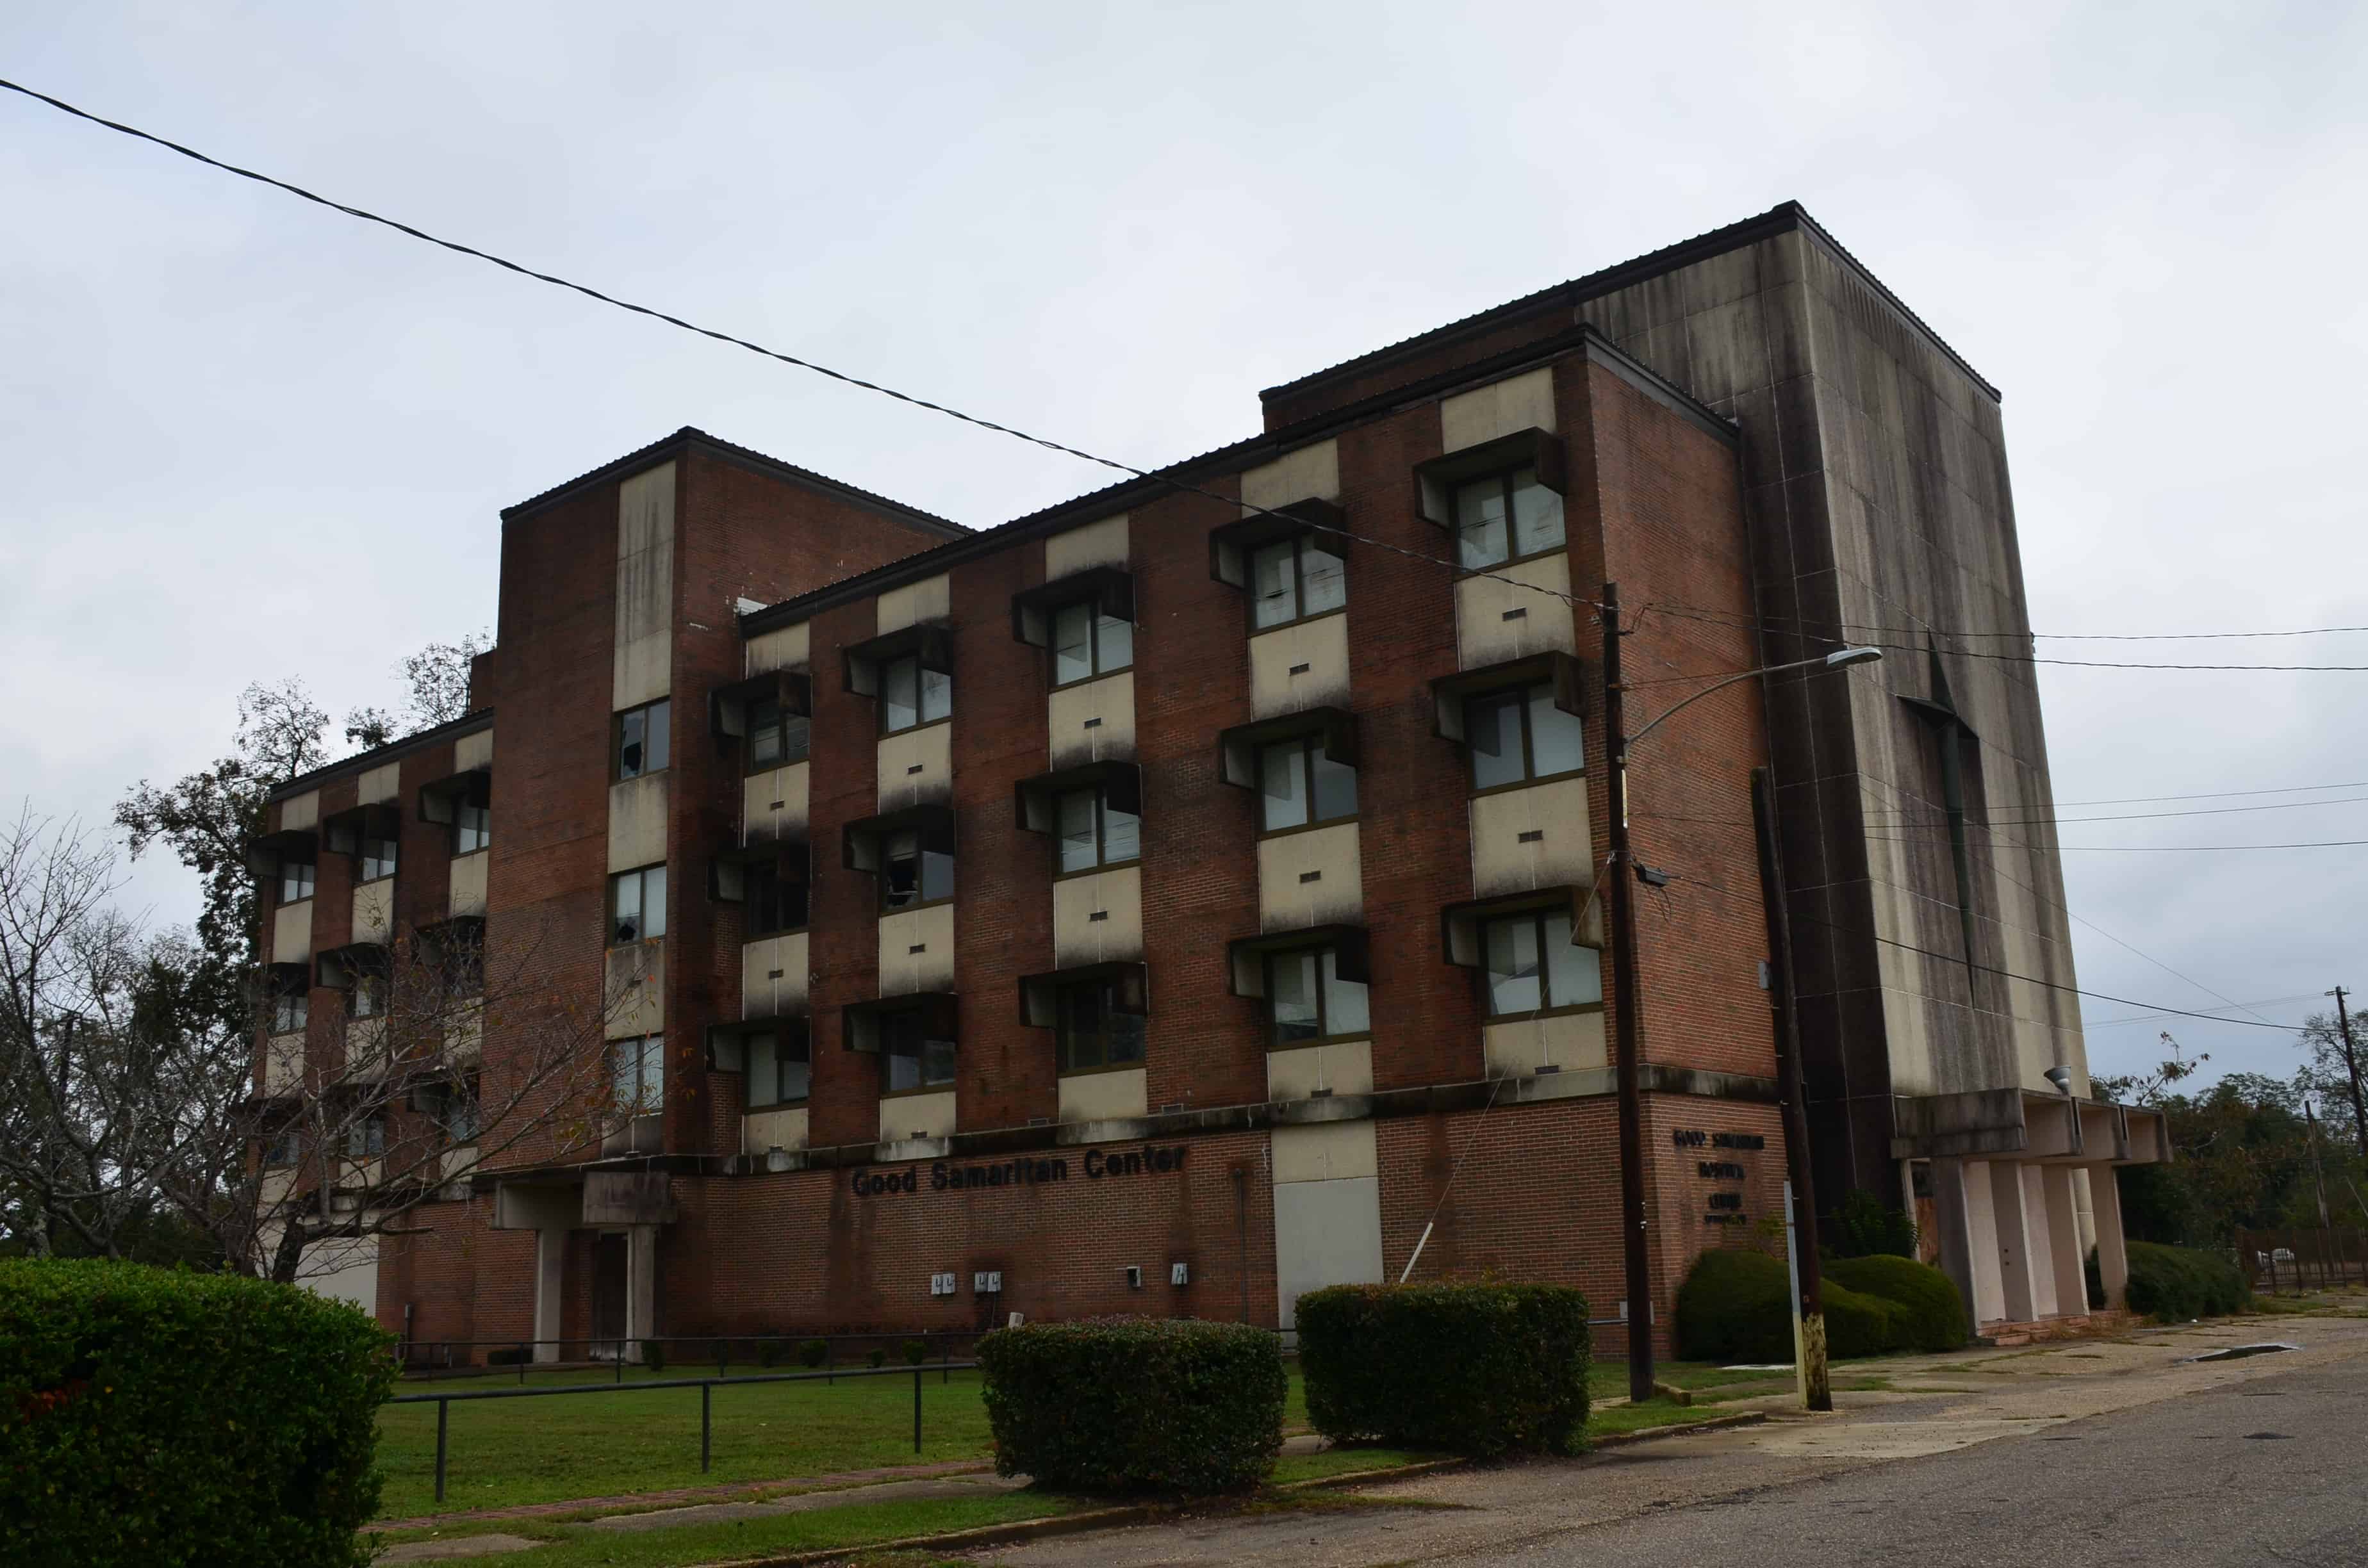 Good Samaritan Hospital in Selma, Alabama